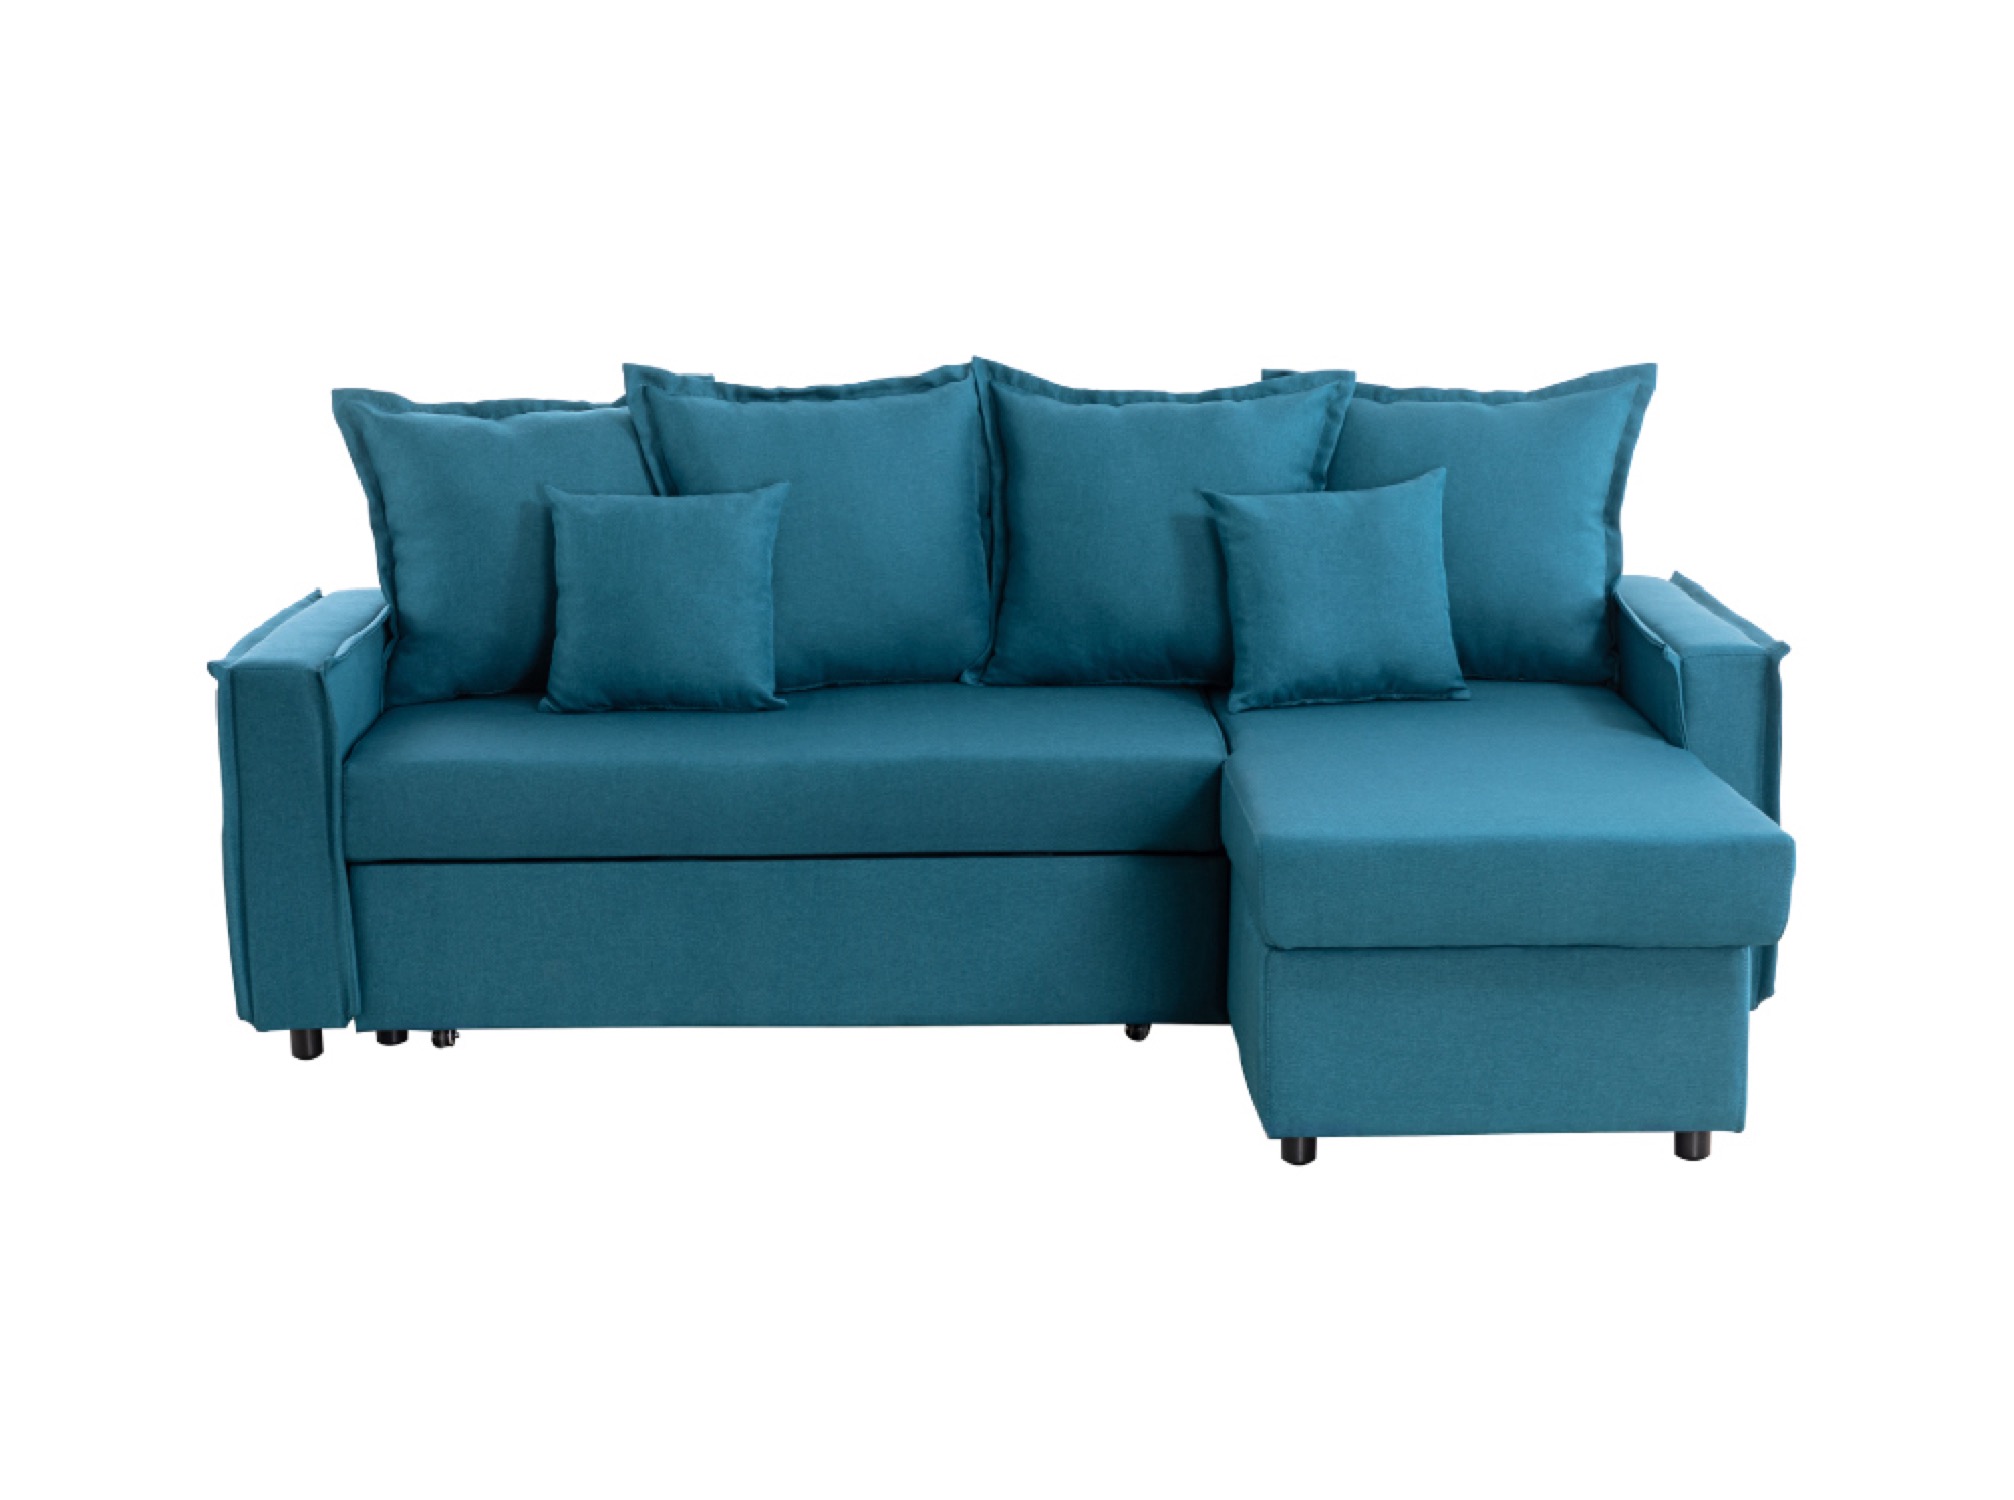 Canapé d'angle Bleu Tissu Moderne Confort